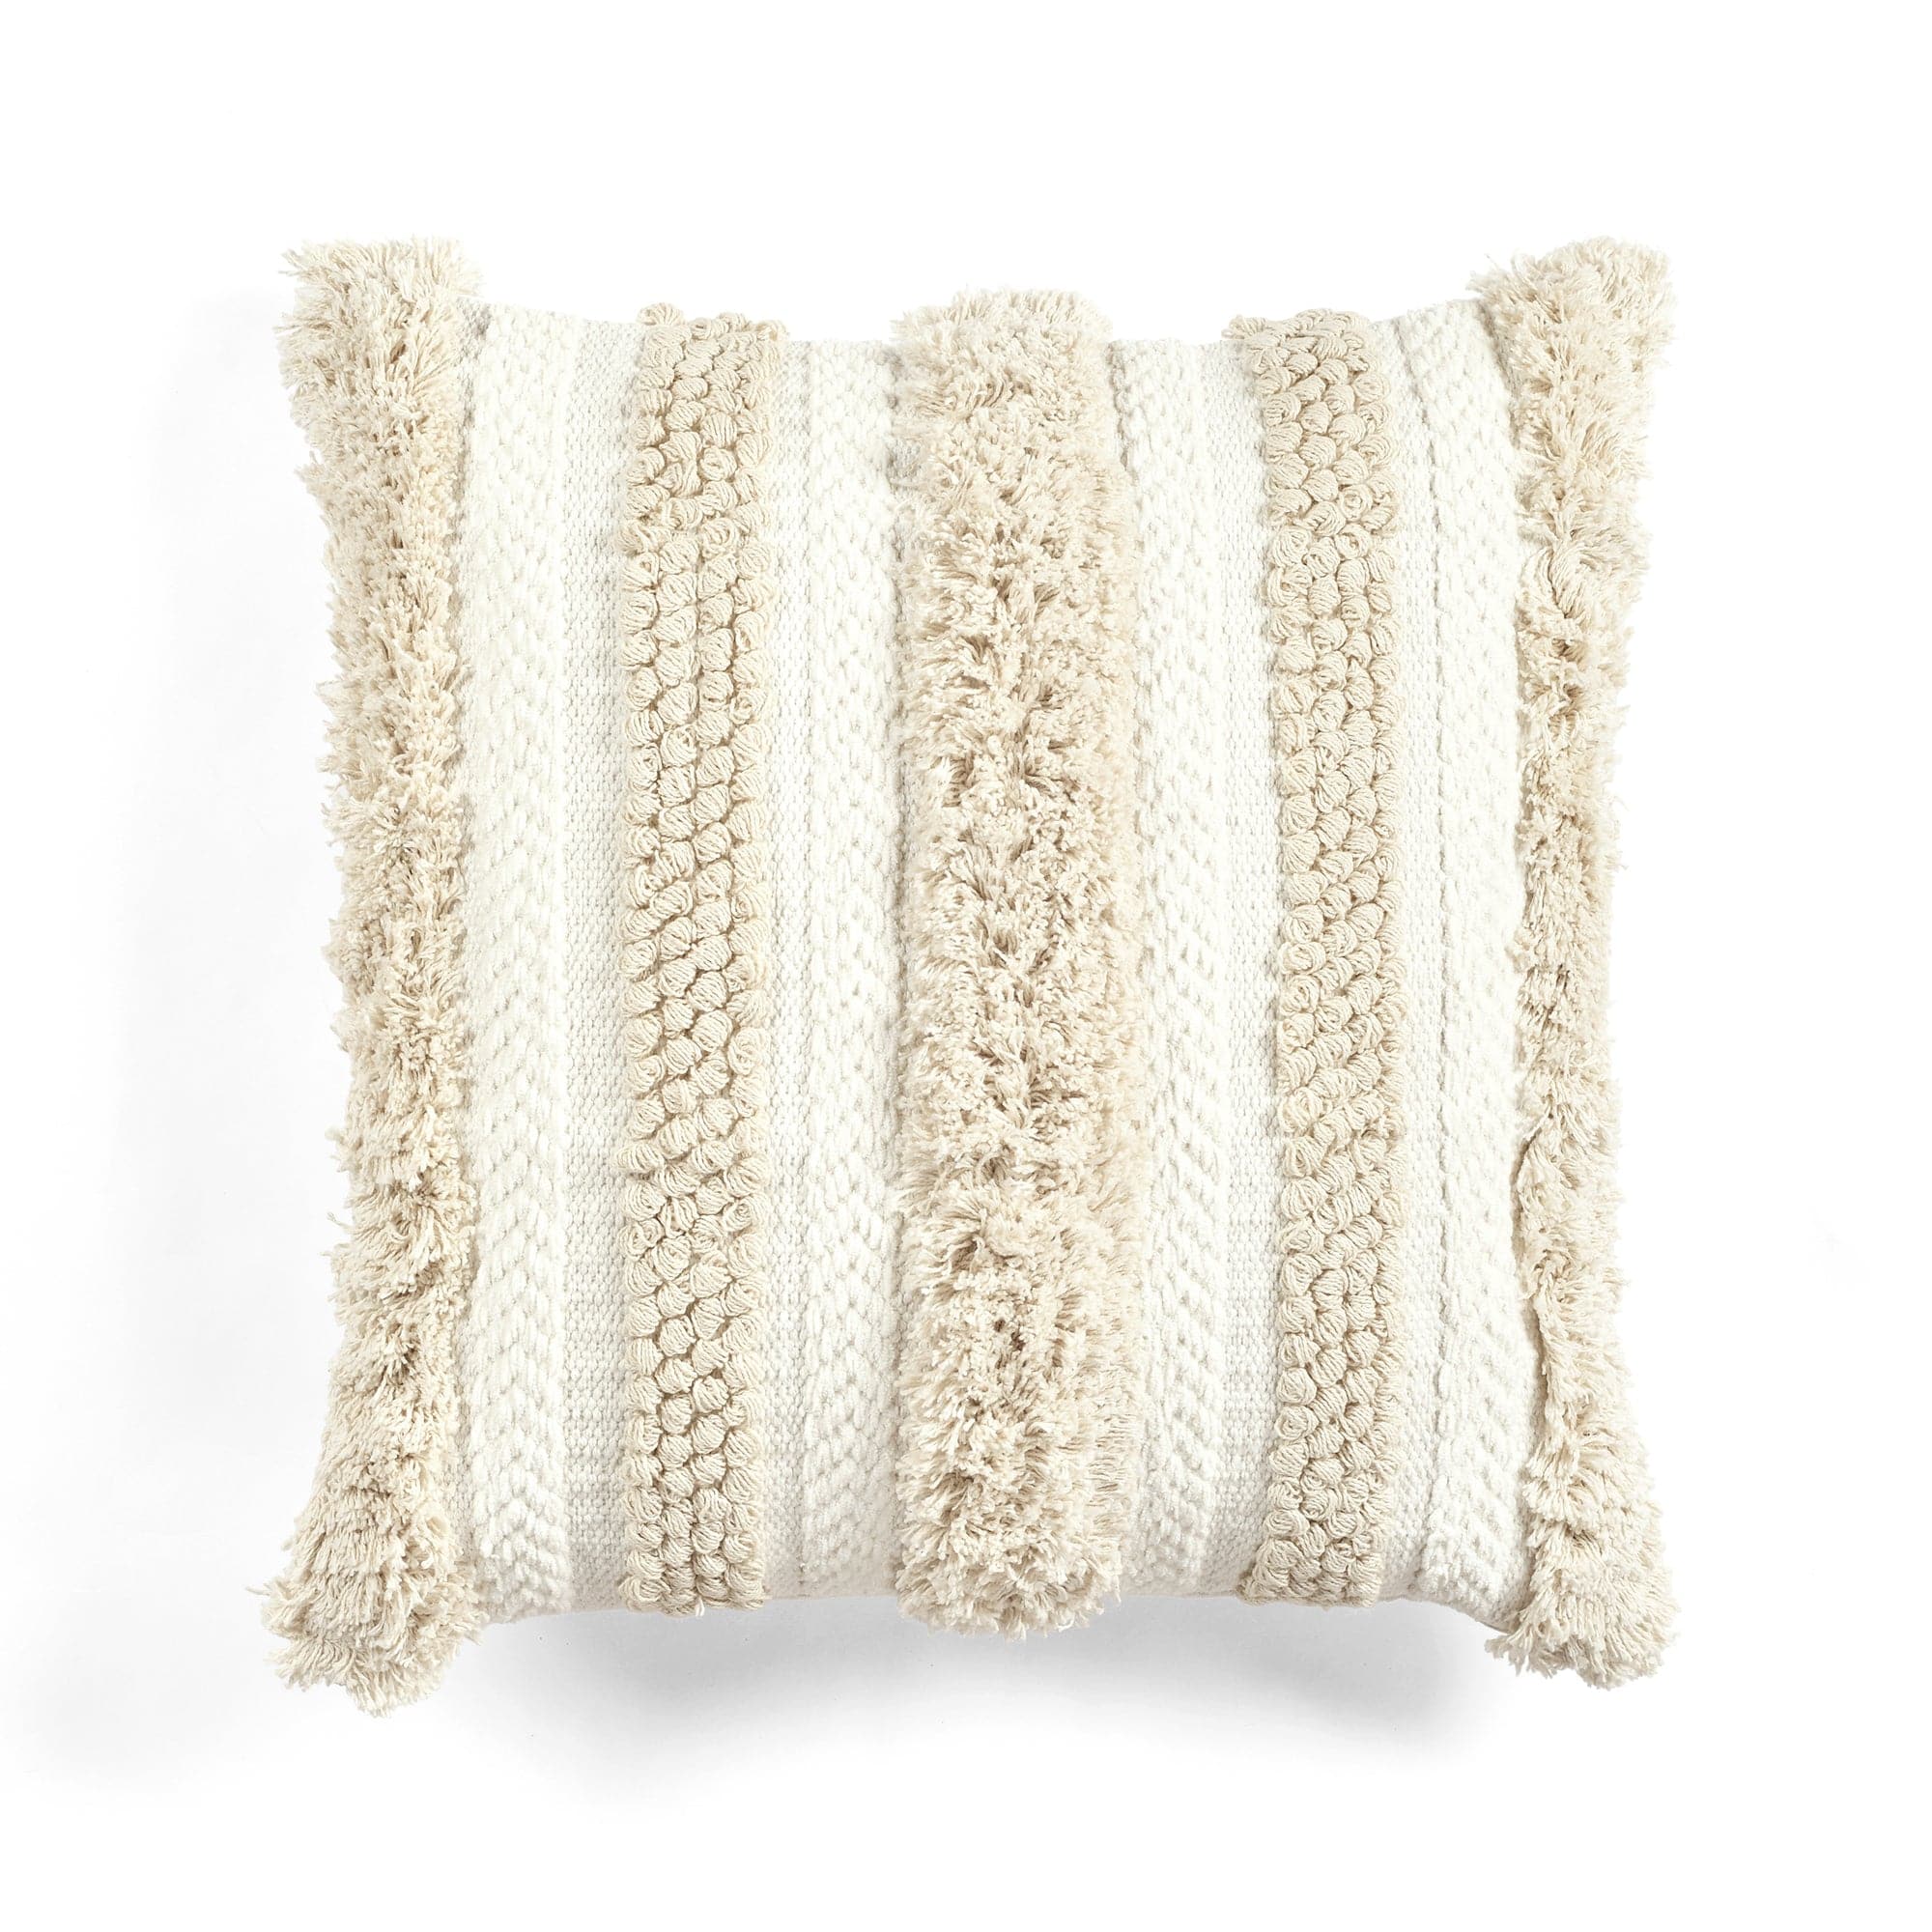 Lush Decor Hygge Row Decorative Pillow Cover White Single 20x20